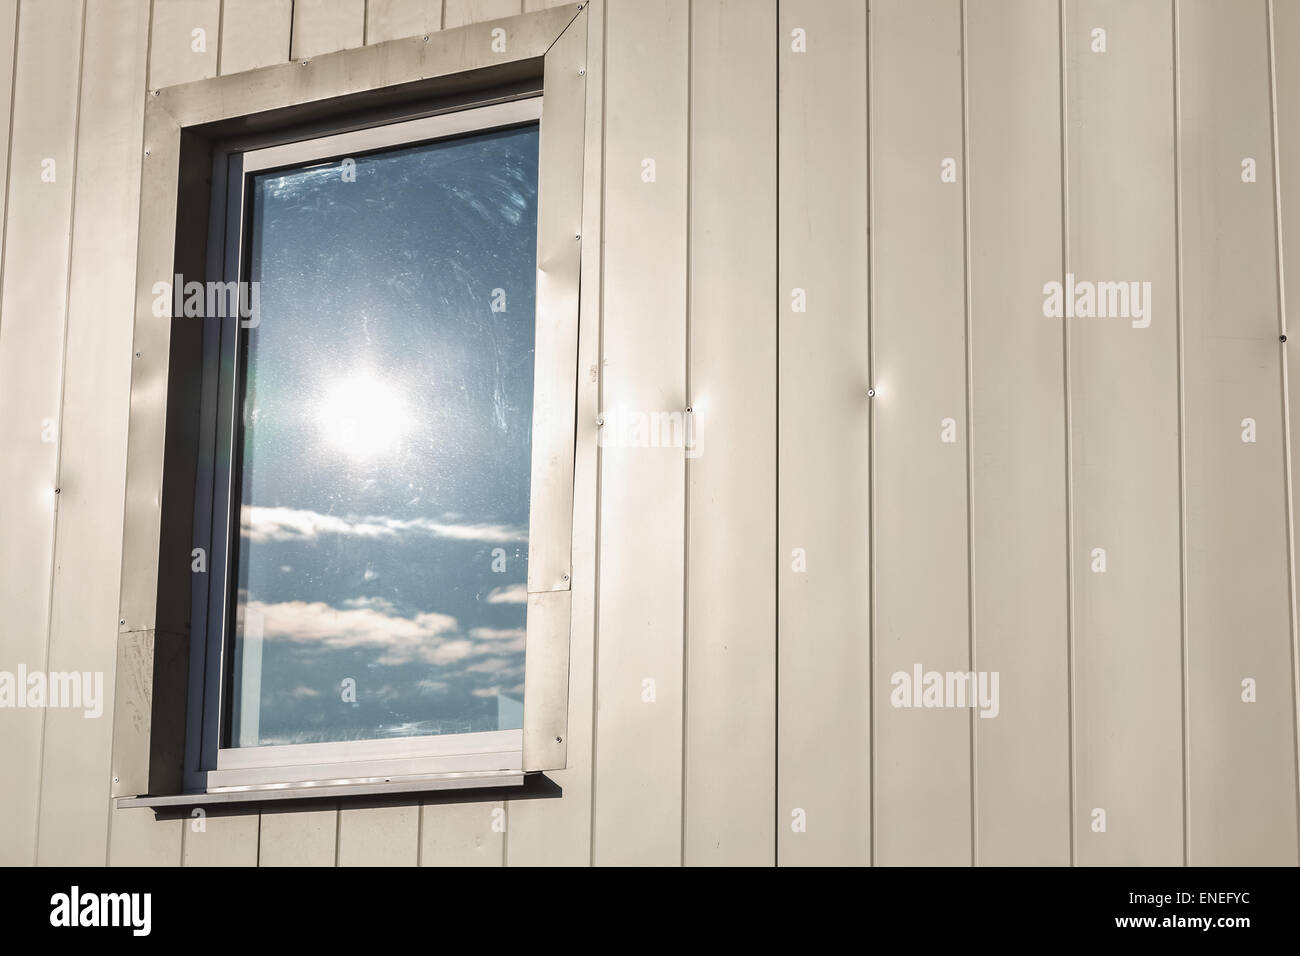 Fenster mit Reflektion der Sonne in hellgelber Farbe Kunststoff siding Paneele Wand Stockfoto